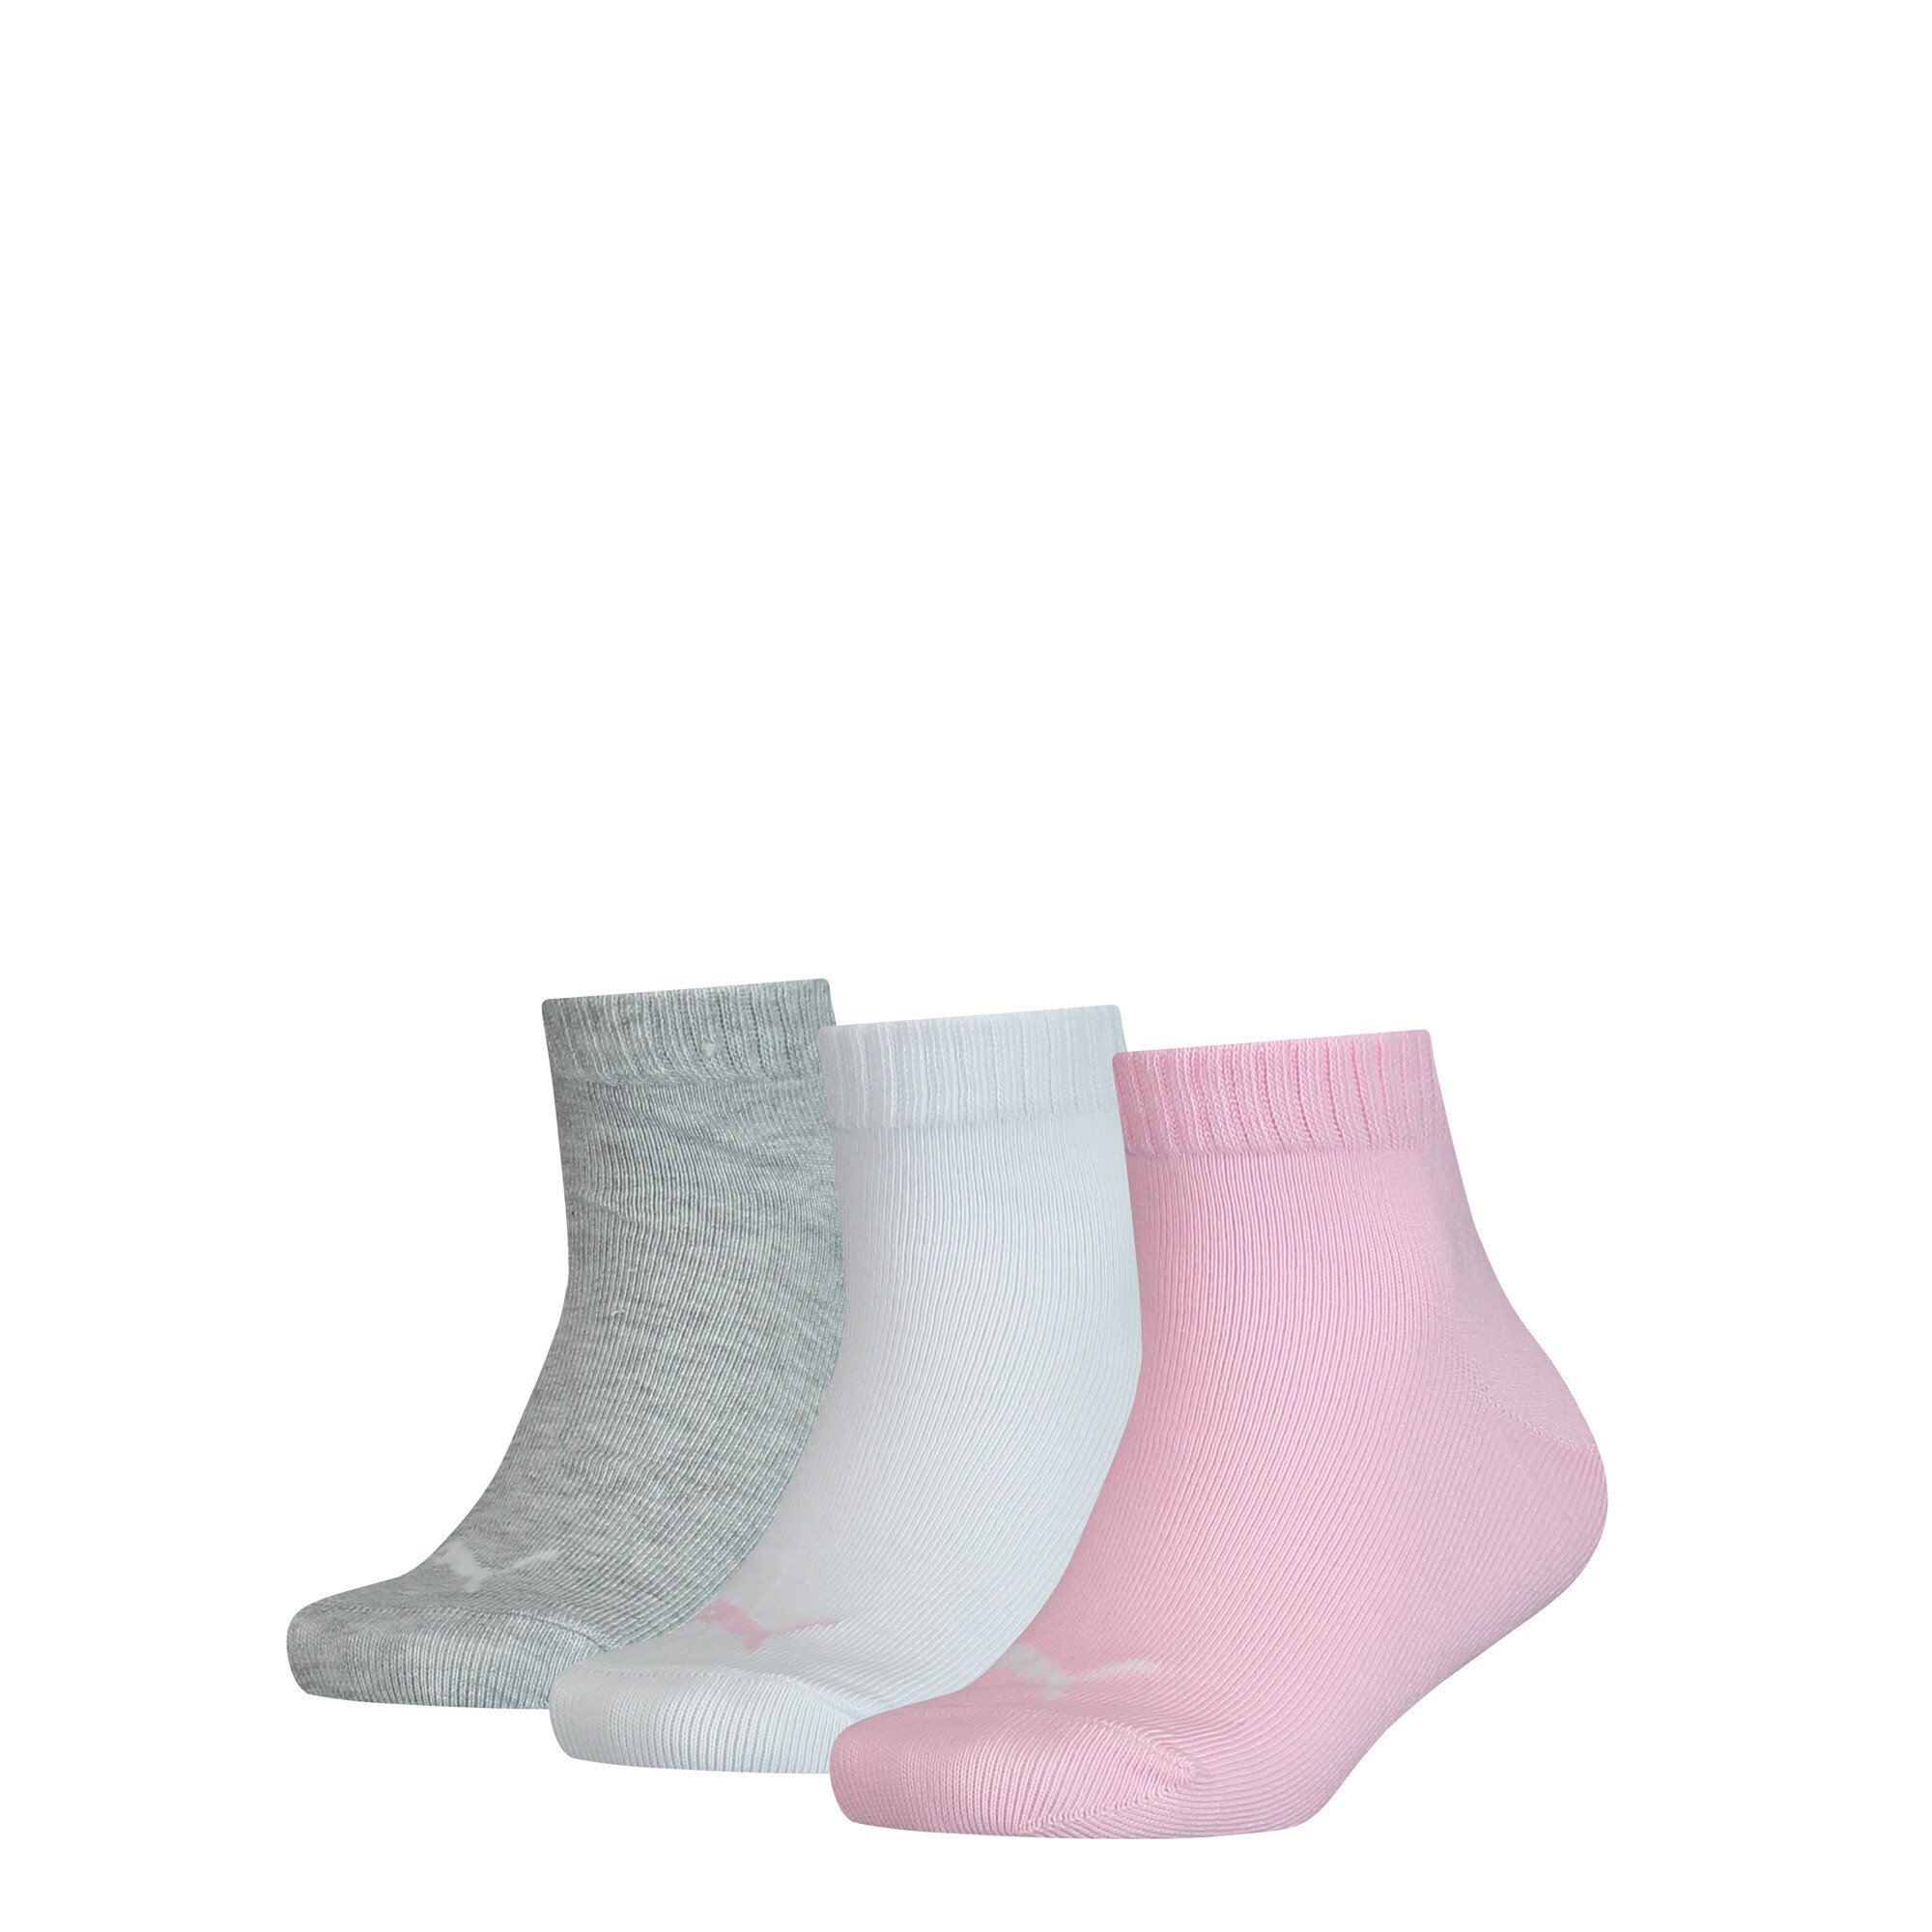 Kids' PUMA Quarter Socks 3 Pack In 70 - Pink, Size 39-42